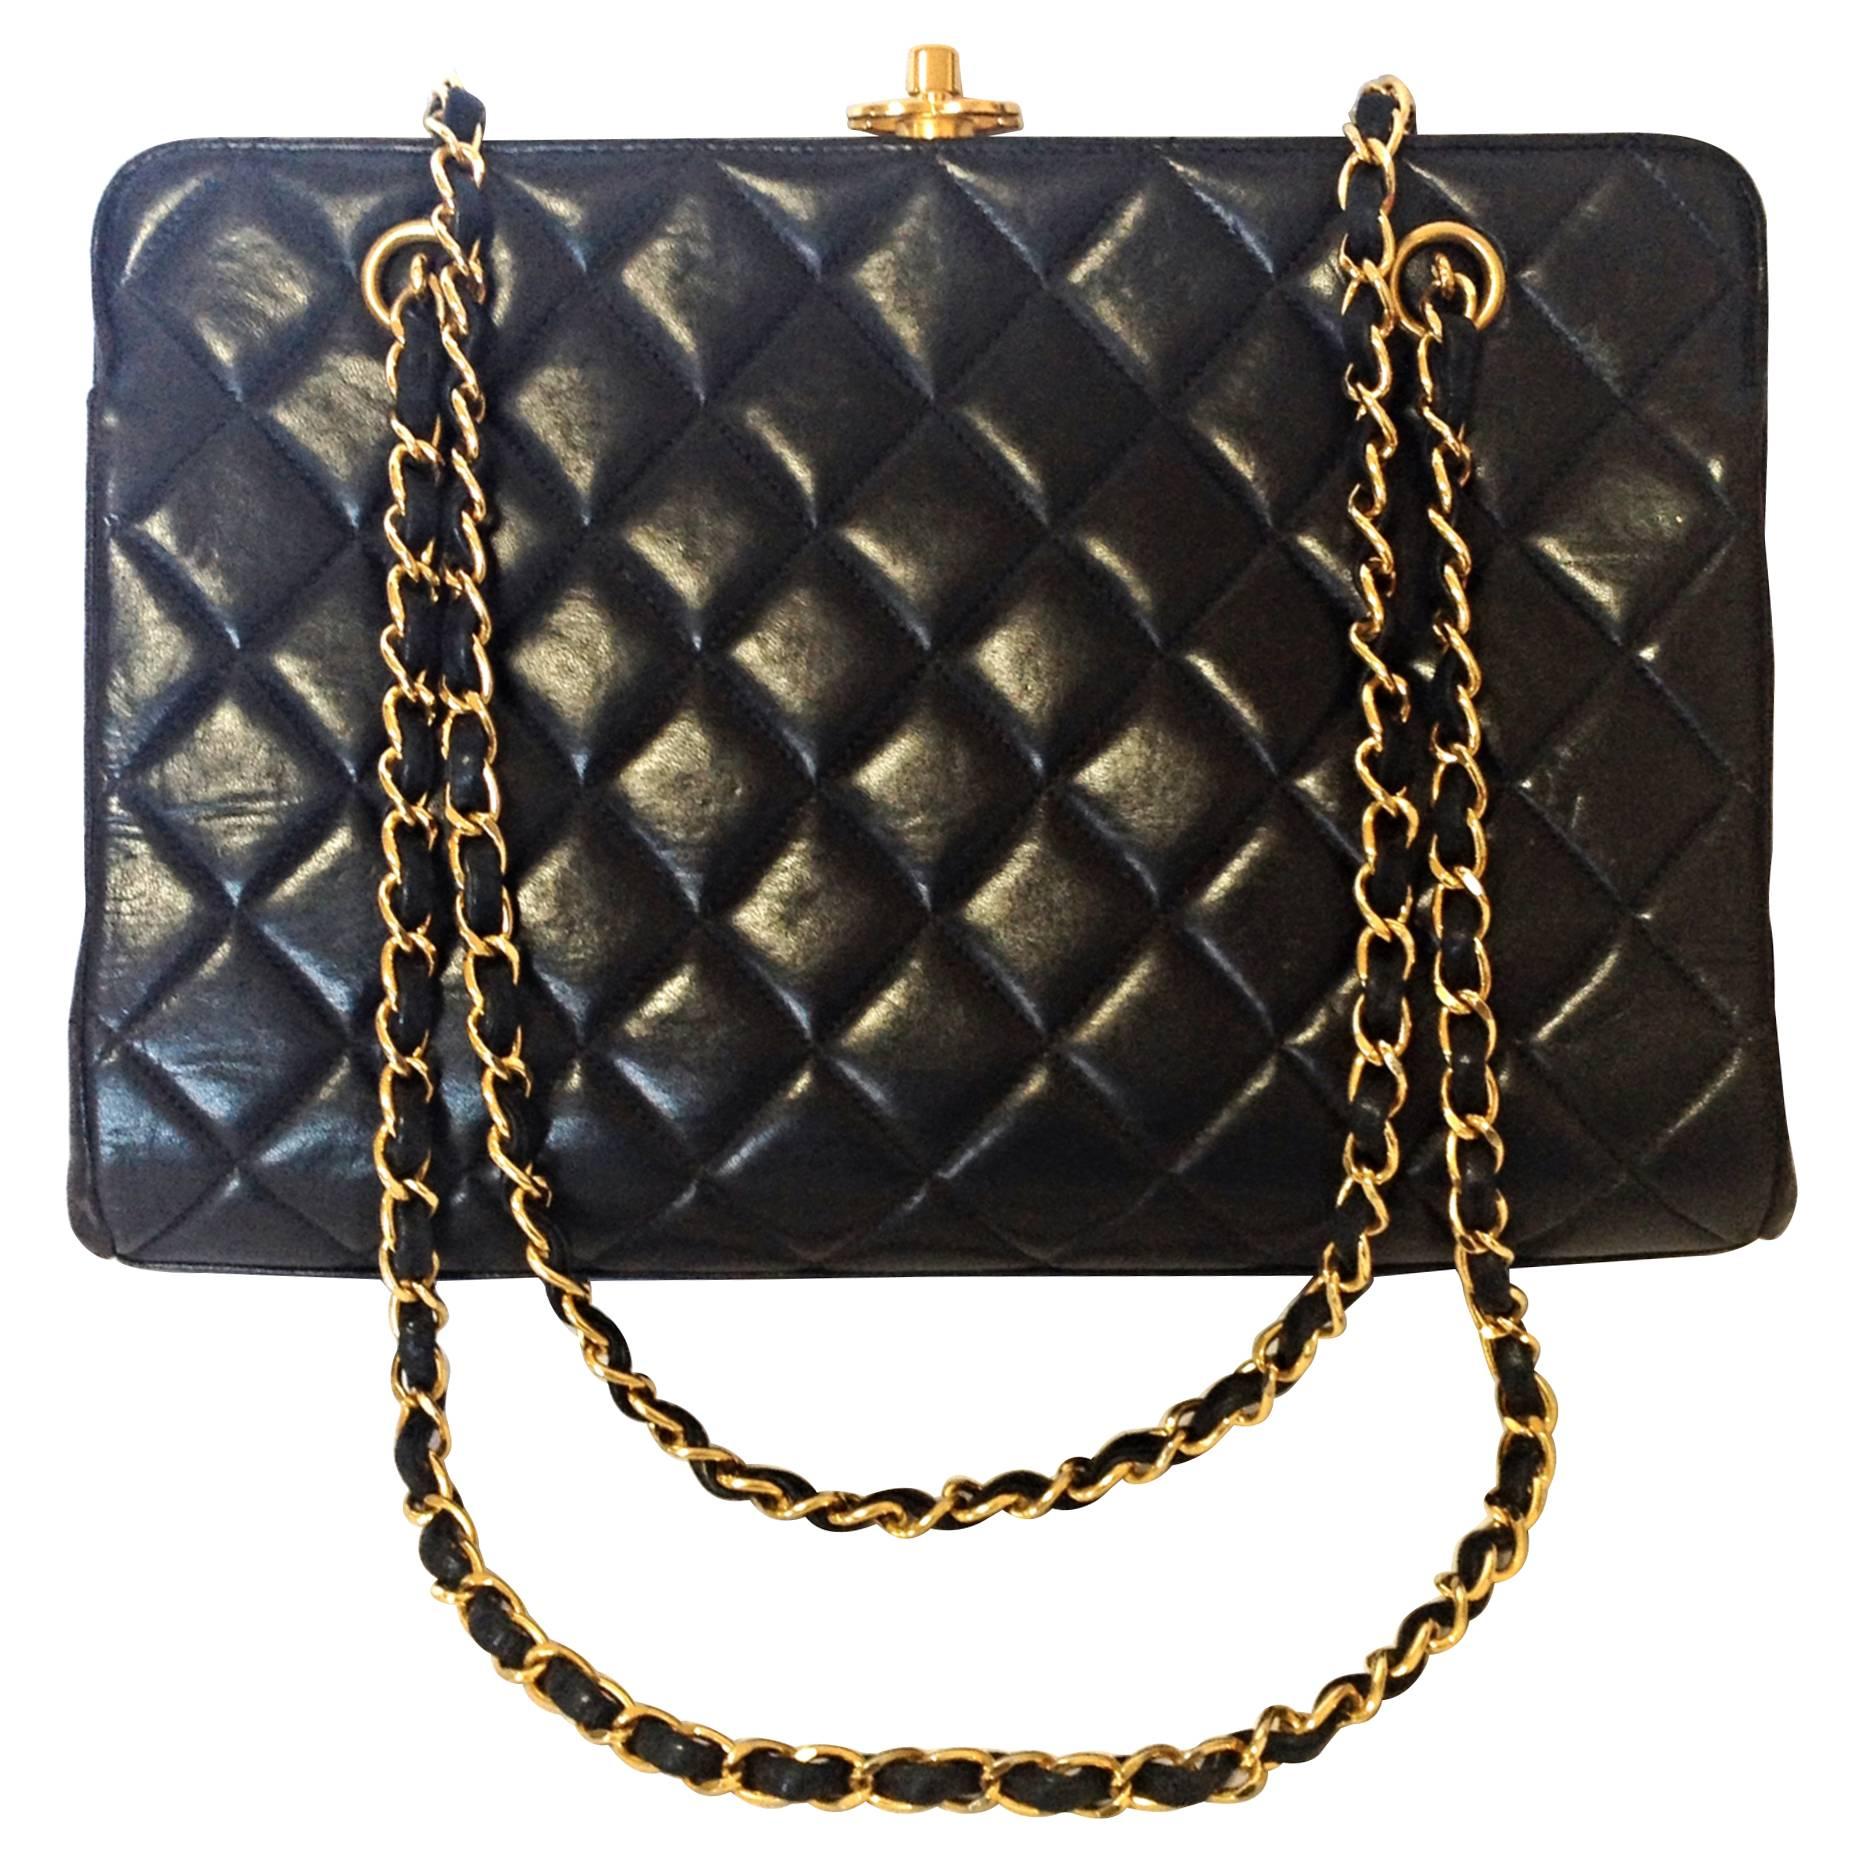 Vintage CHANEL black leather chain shoulder bag with golden CC kiss lock closure For Sale